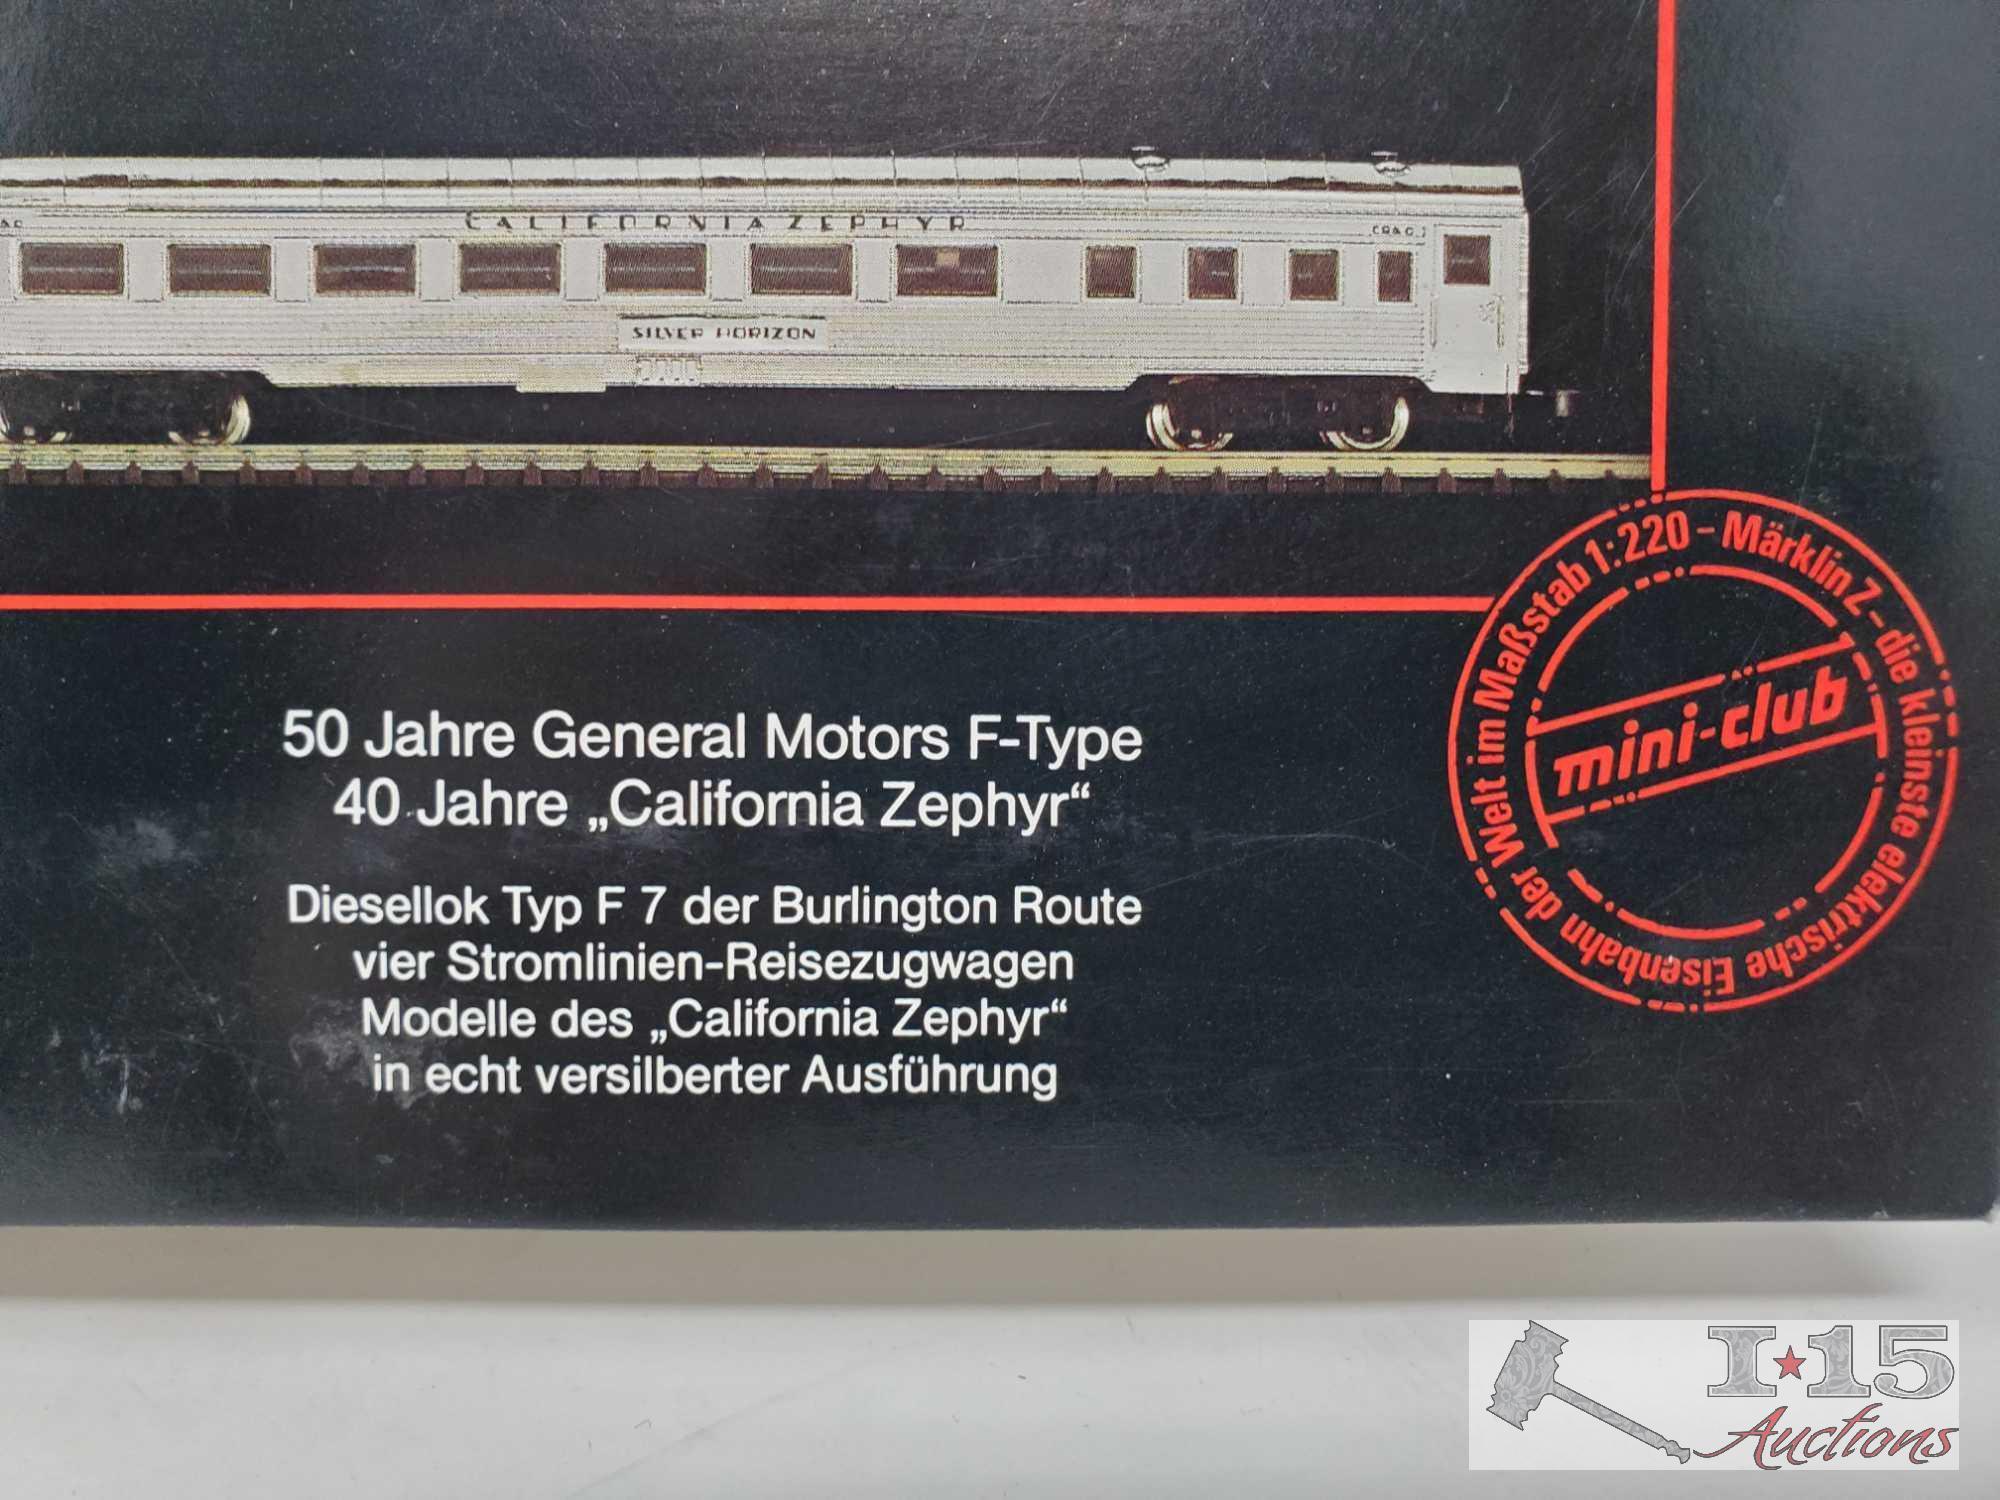 Marklin Mini-Club Z Scale King Ludwig II" Train Set- 81421